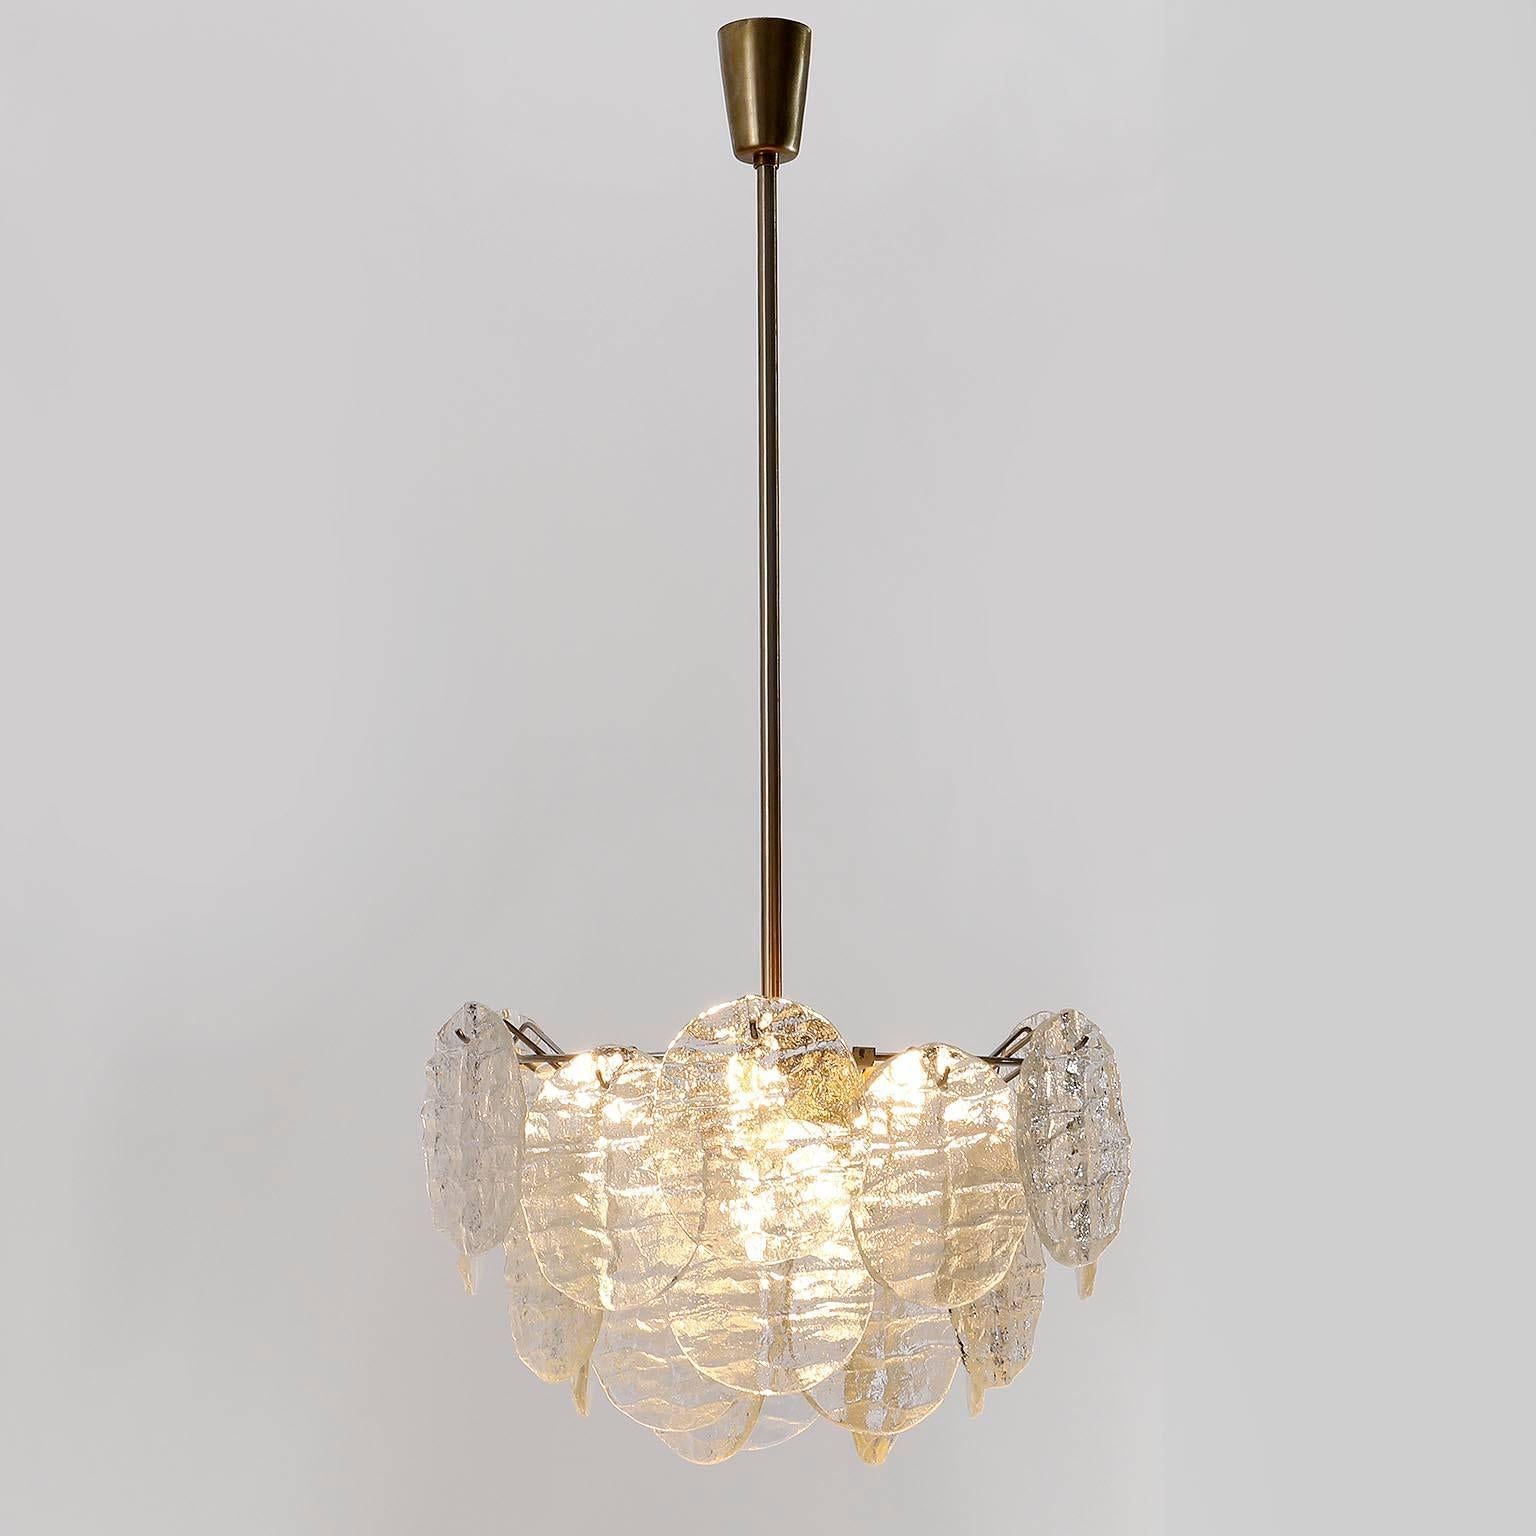 Brass Two Kalmar 'Blatt' Pendant Lights Chandeliers, Textured Glass Nickel, 1970s For Sale